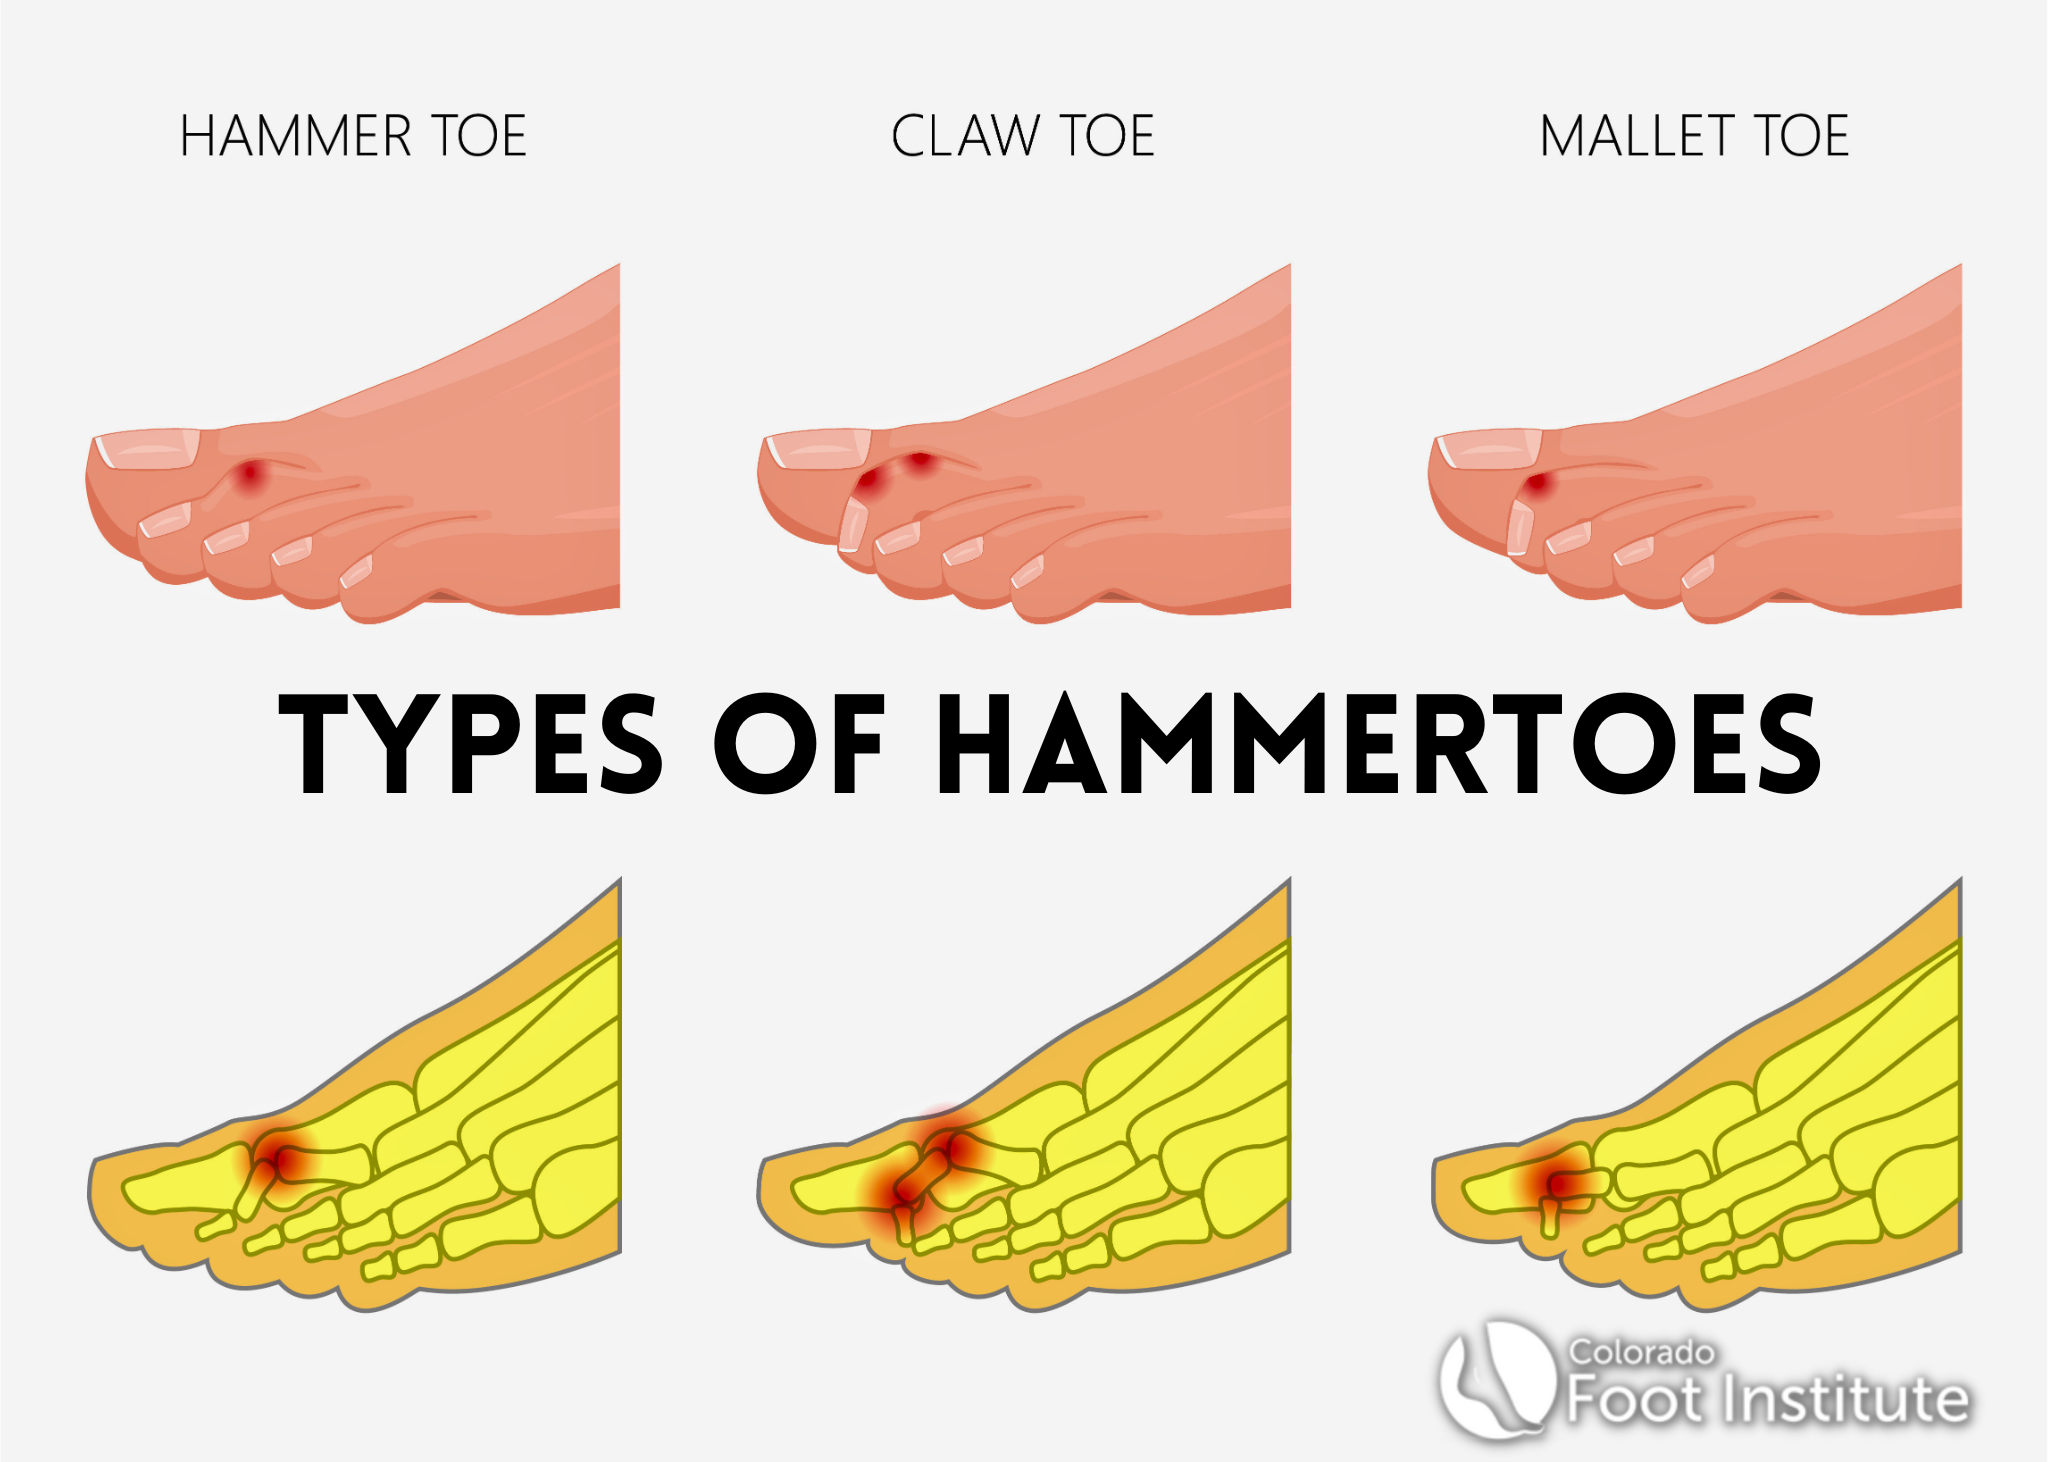 Hammertoe images